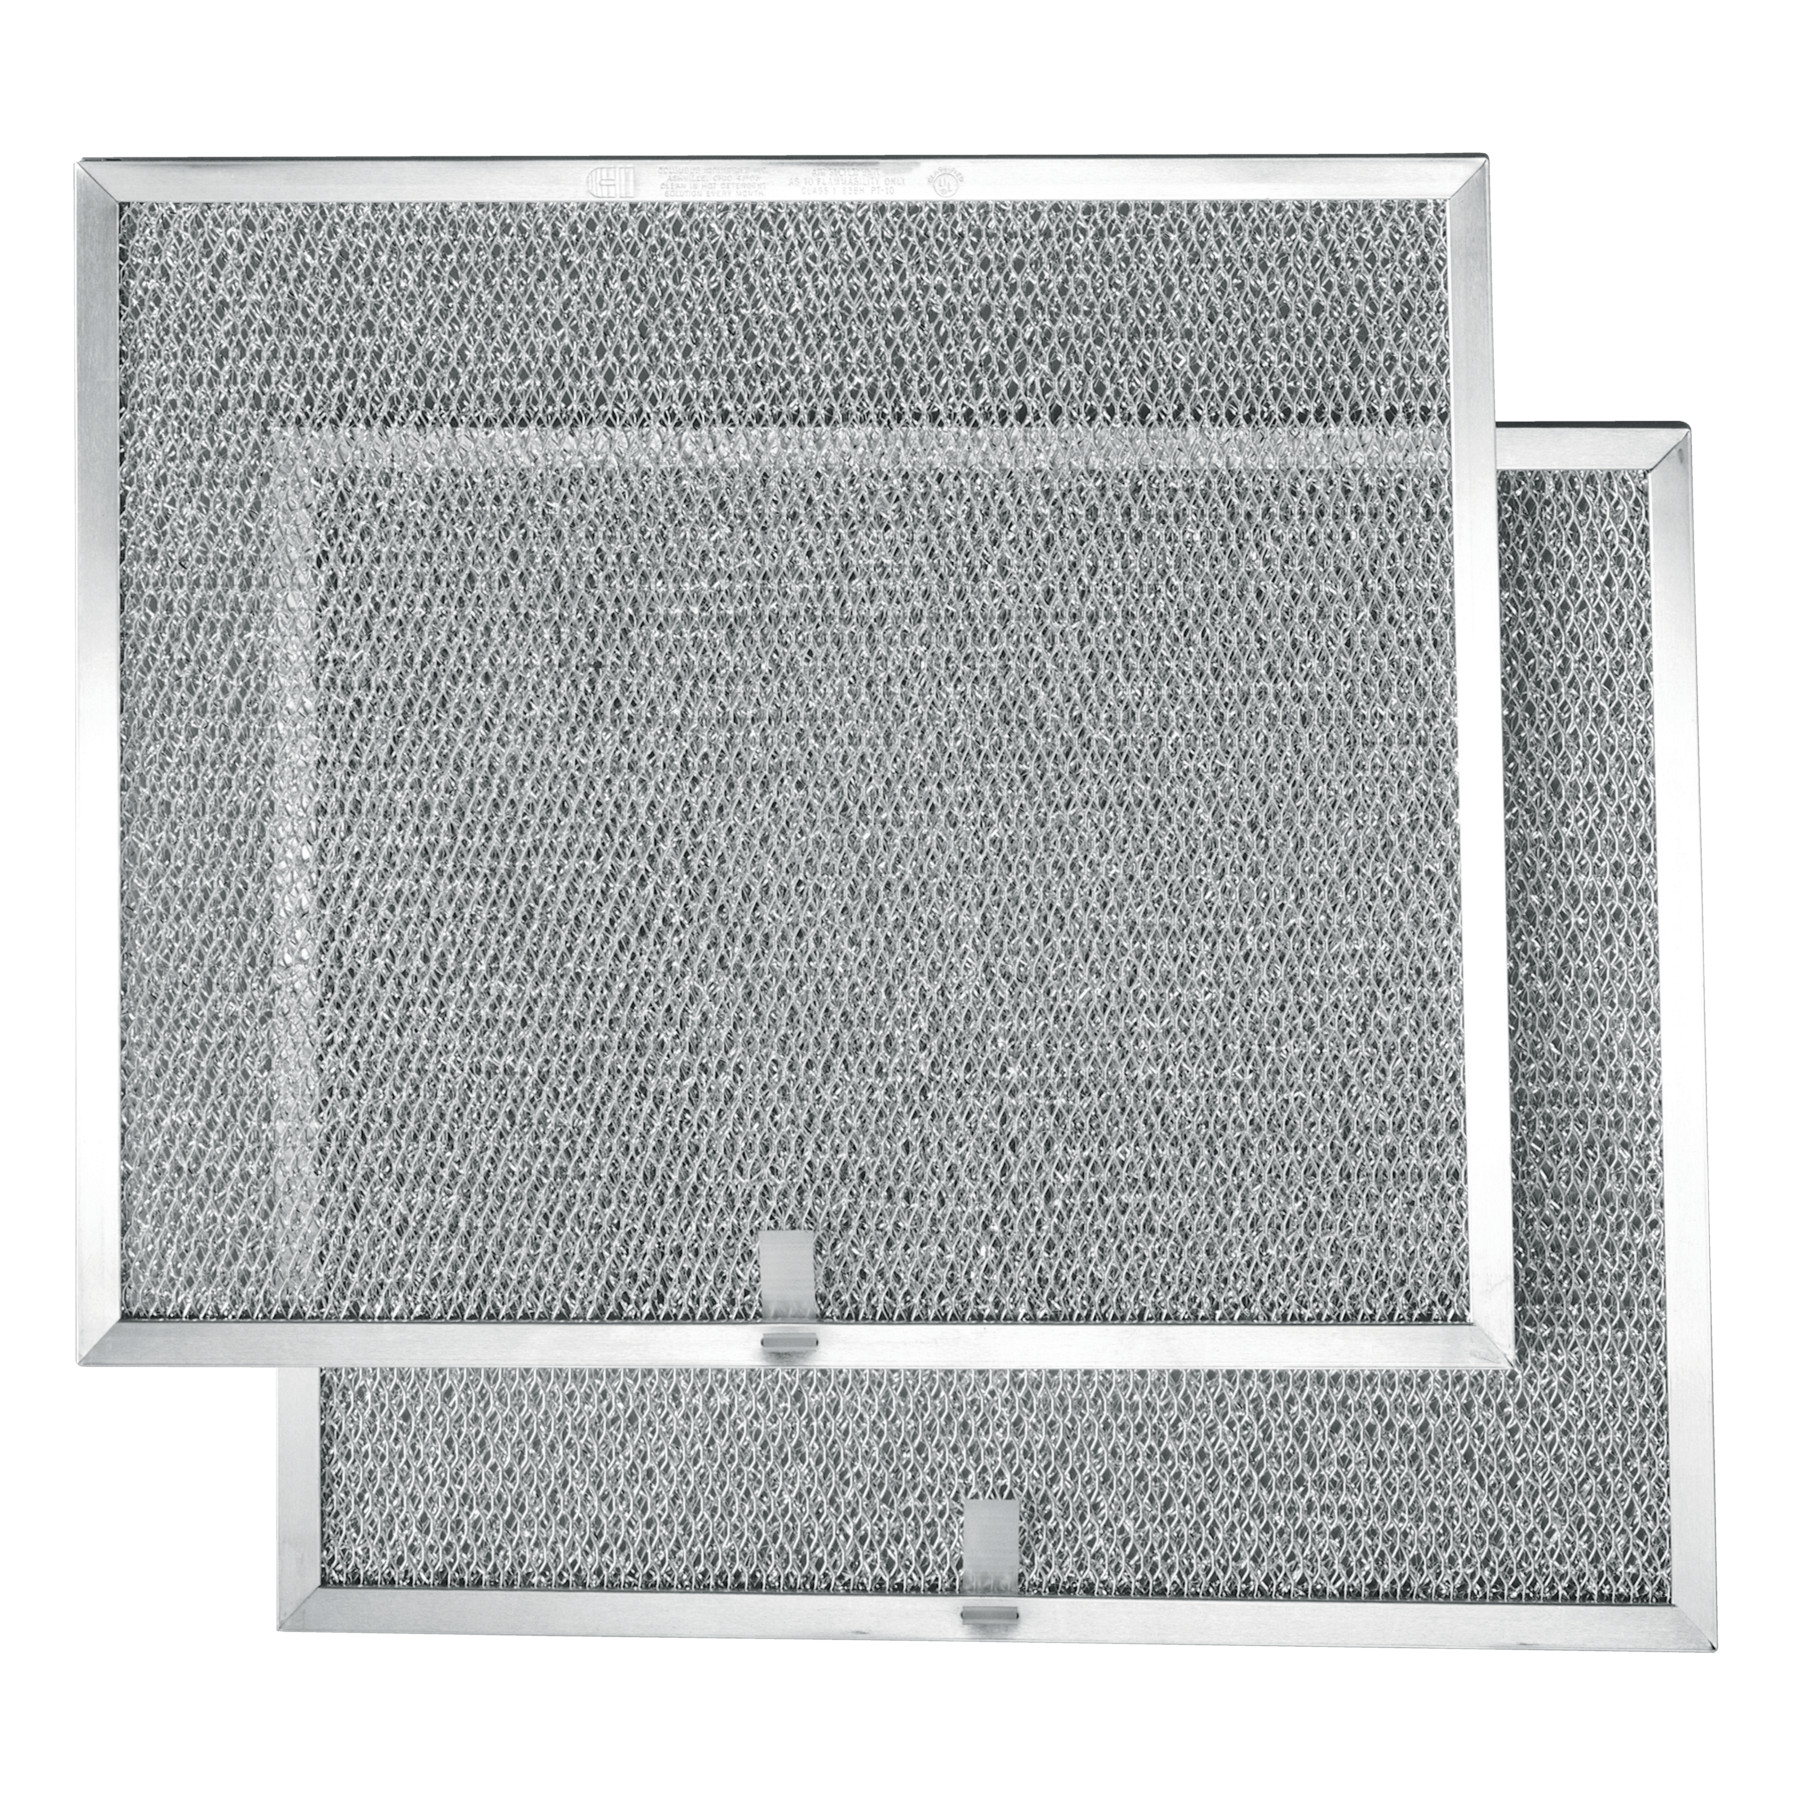 Broan-NuTone Aluminum Filter for 30-Inch wide QS Series Range Hood, (2-Pack)